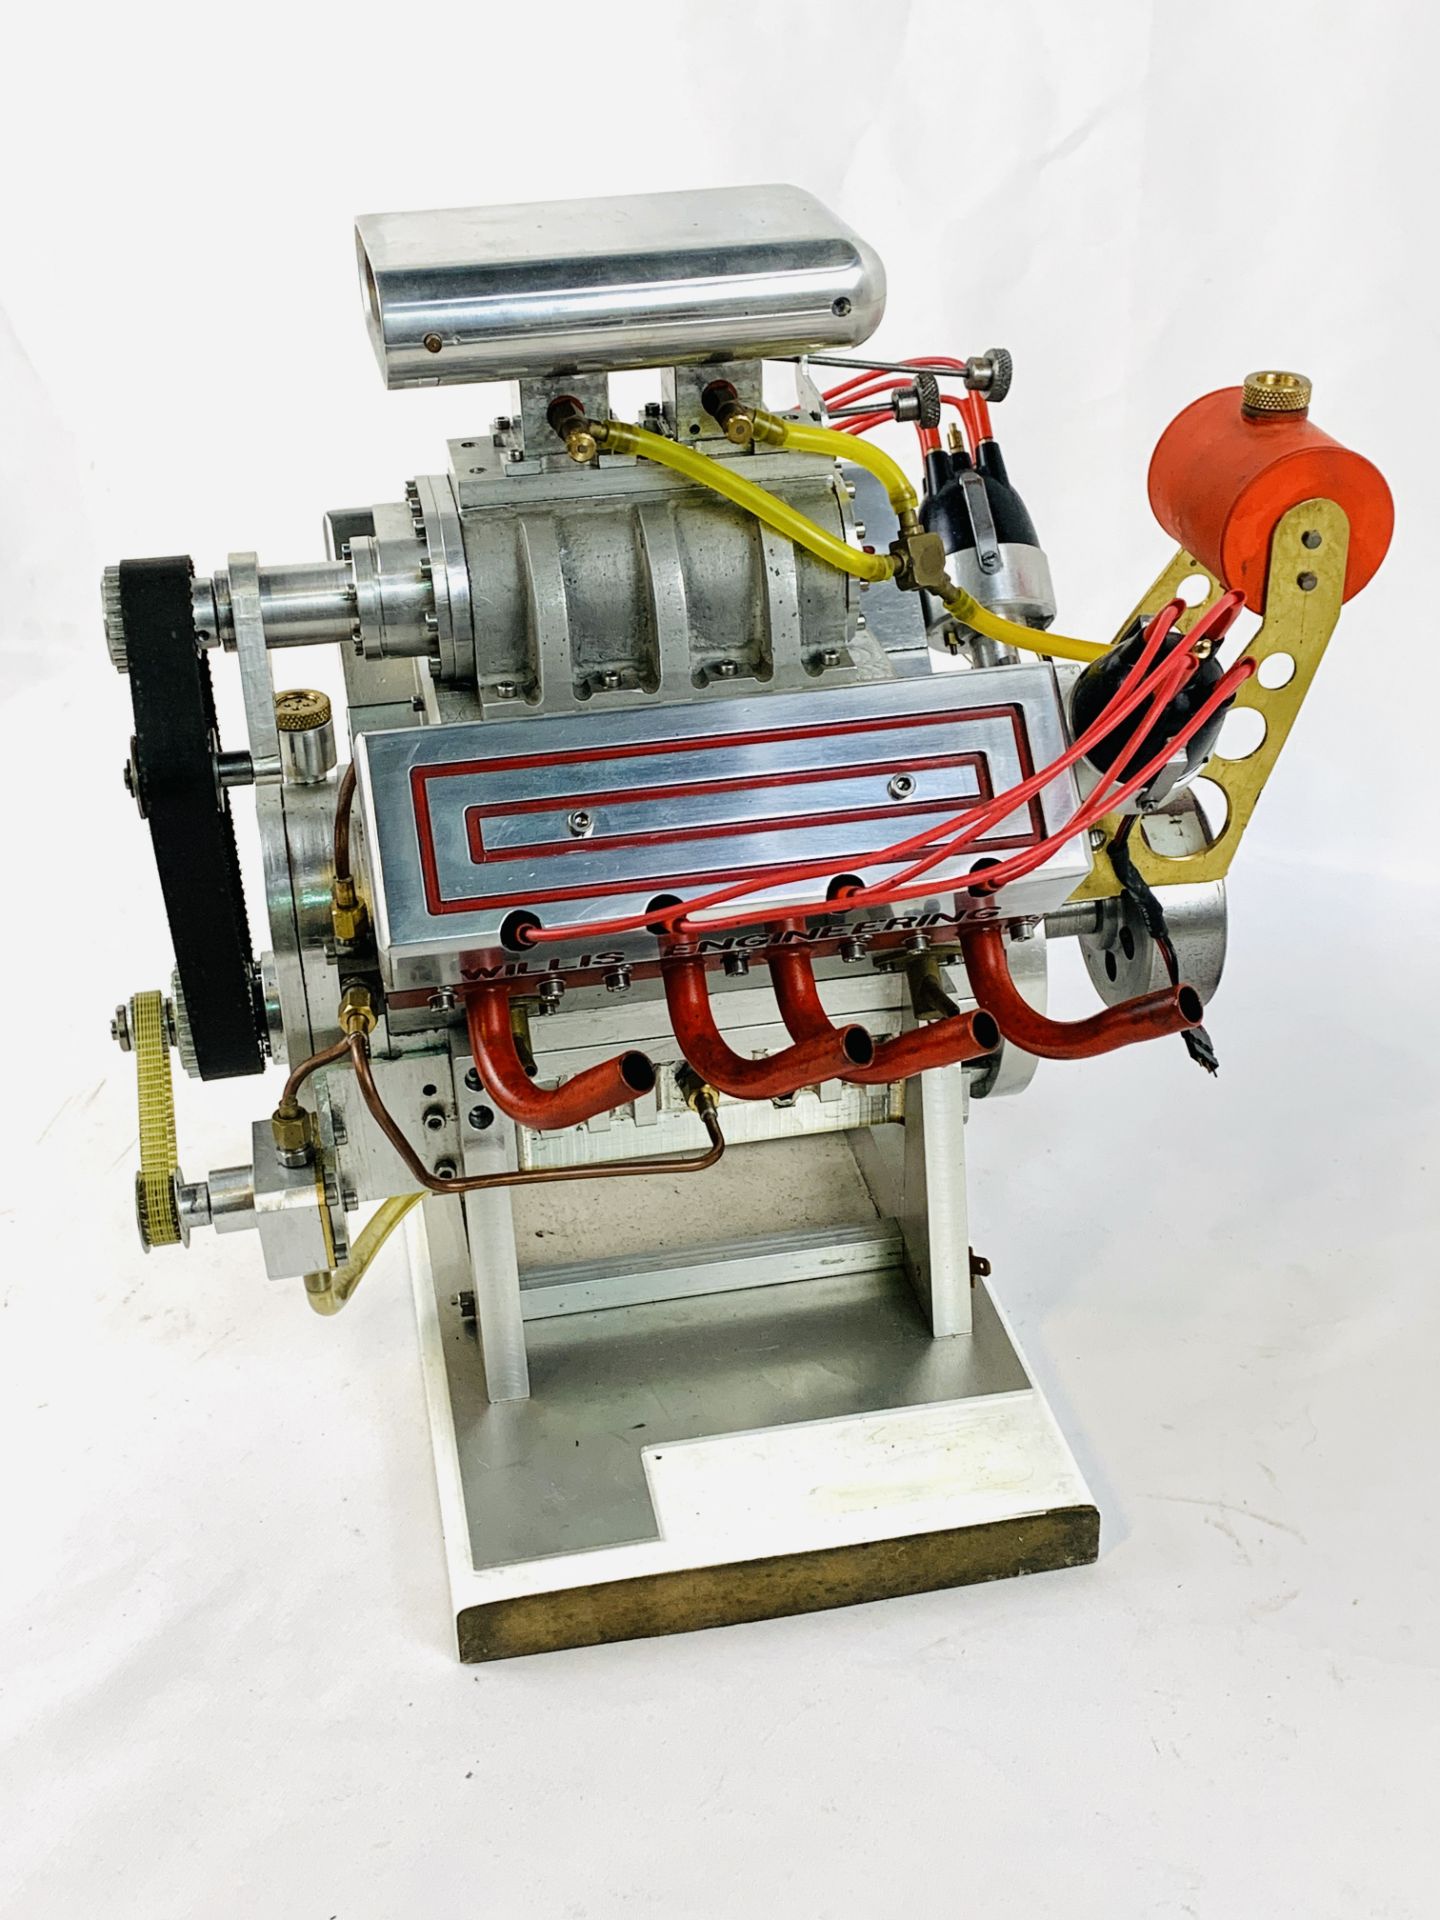 Model V8 engine by 'Willis Engineering'. - Image 4 of 6